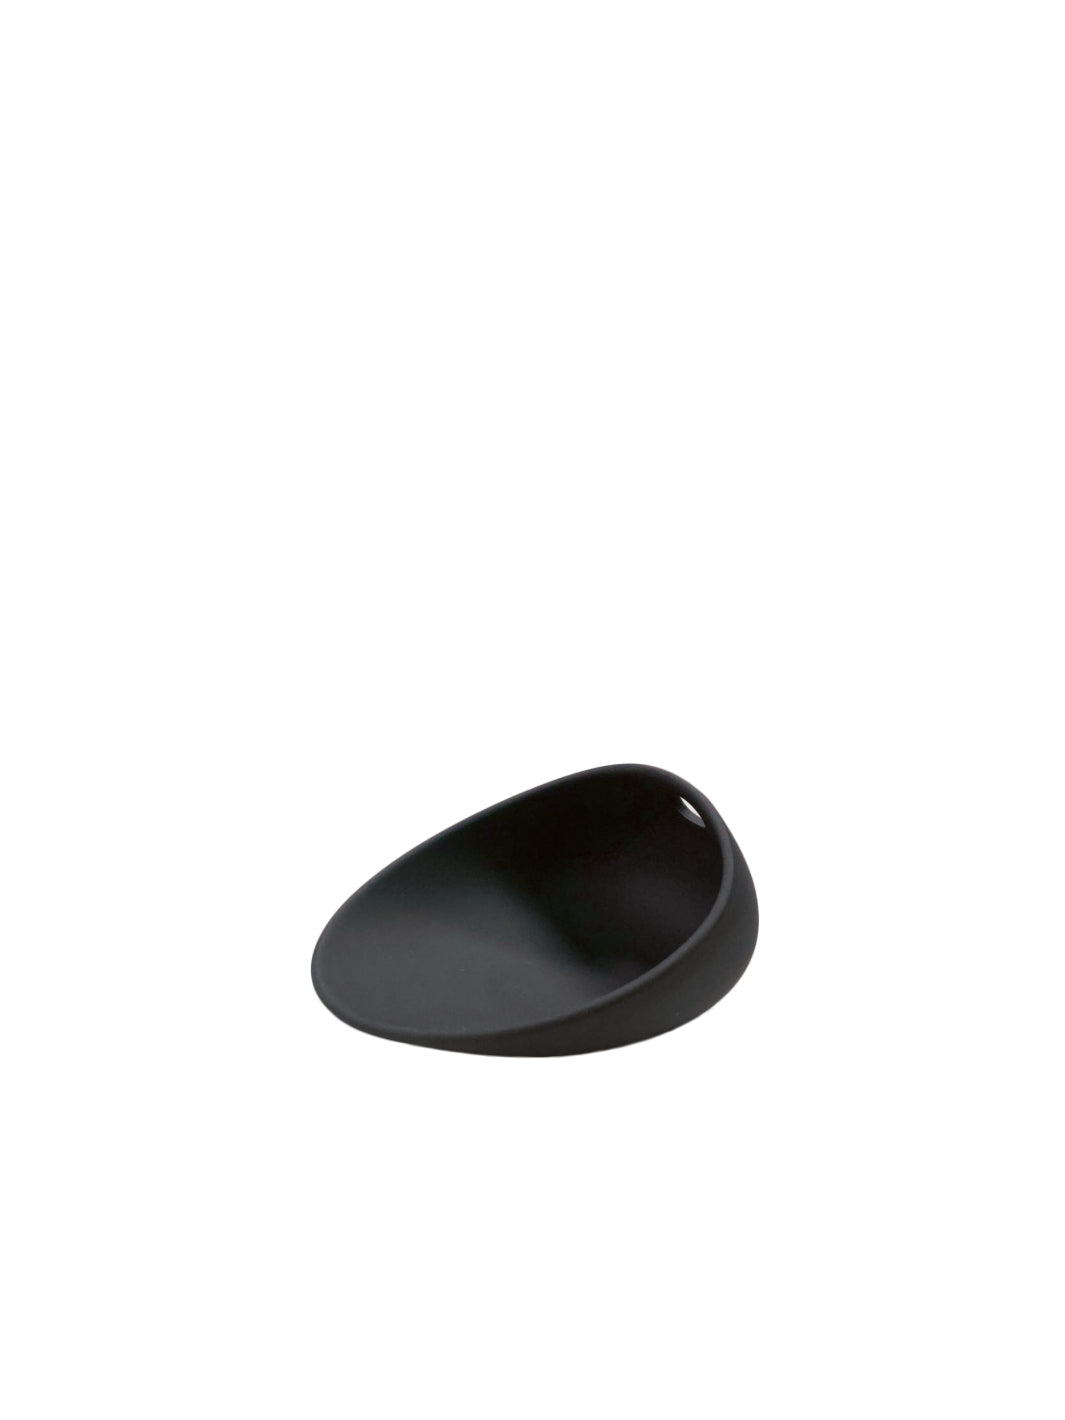 COOKPLAY Jomon Mini Bowl-Plate (10x8cm/4x3.15in)